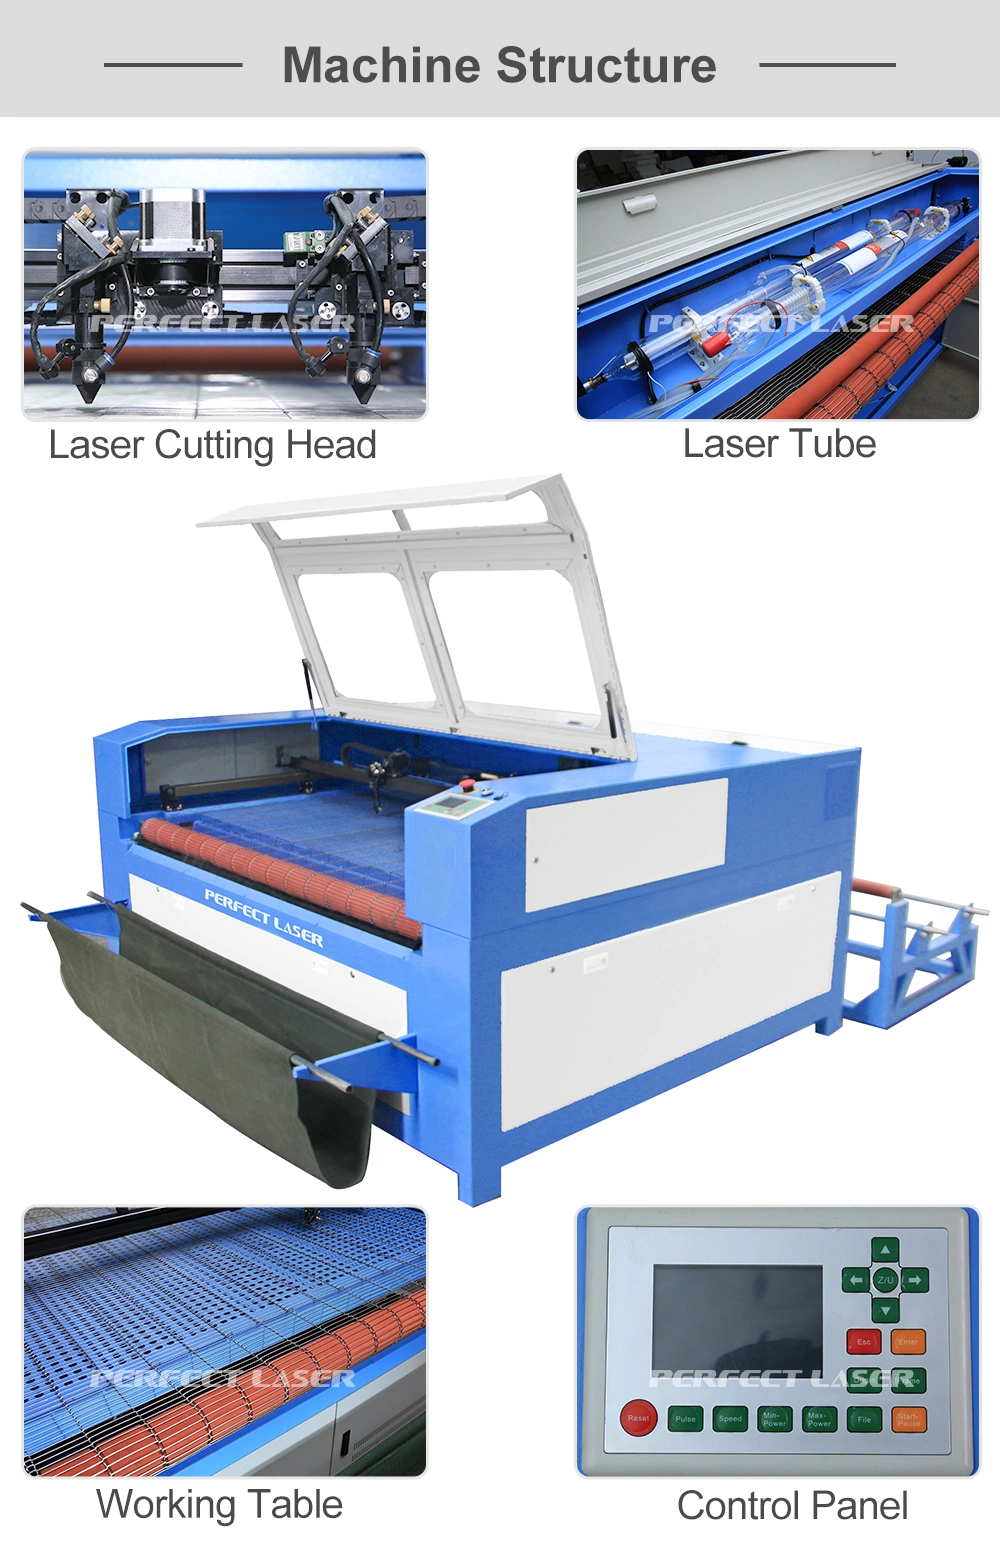 100W CO2 Fabric Laser Engraving Cutting Machine for Car Cushion